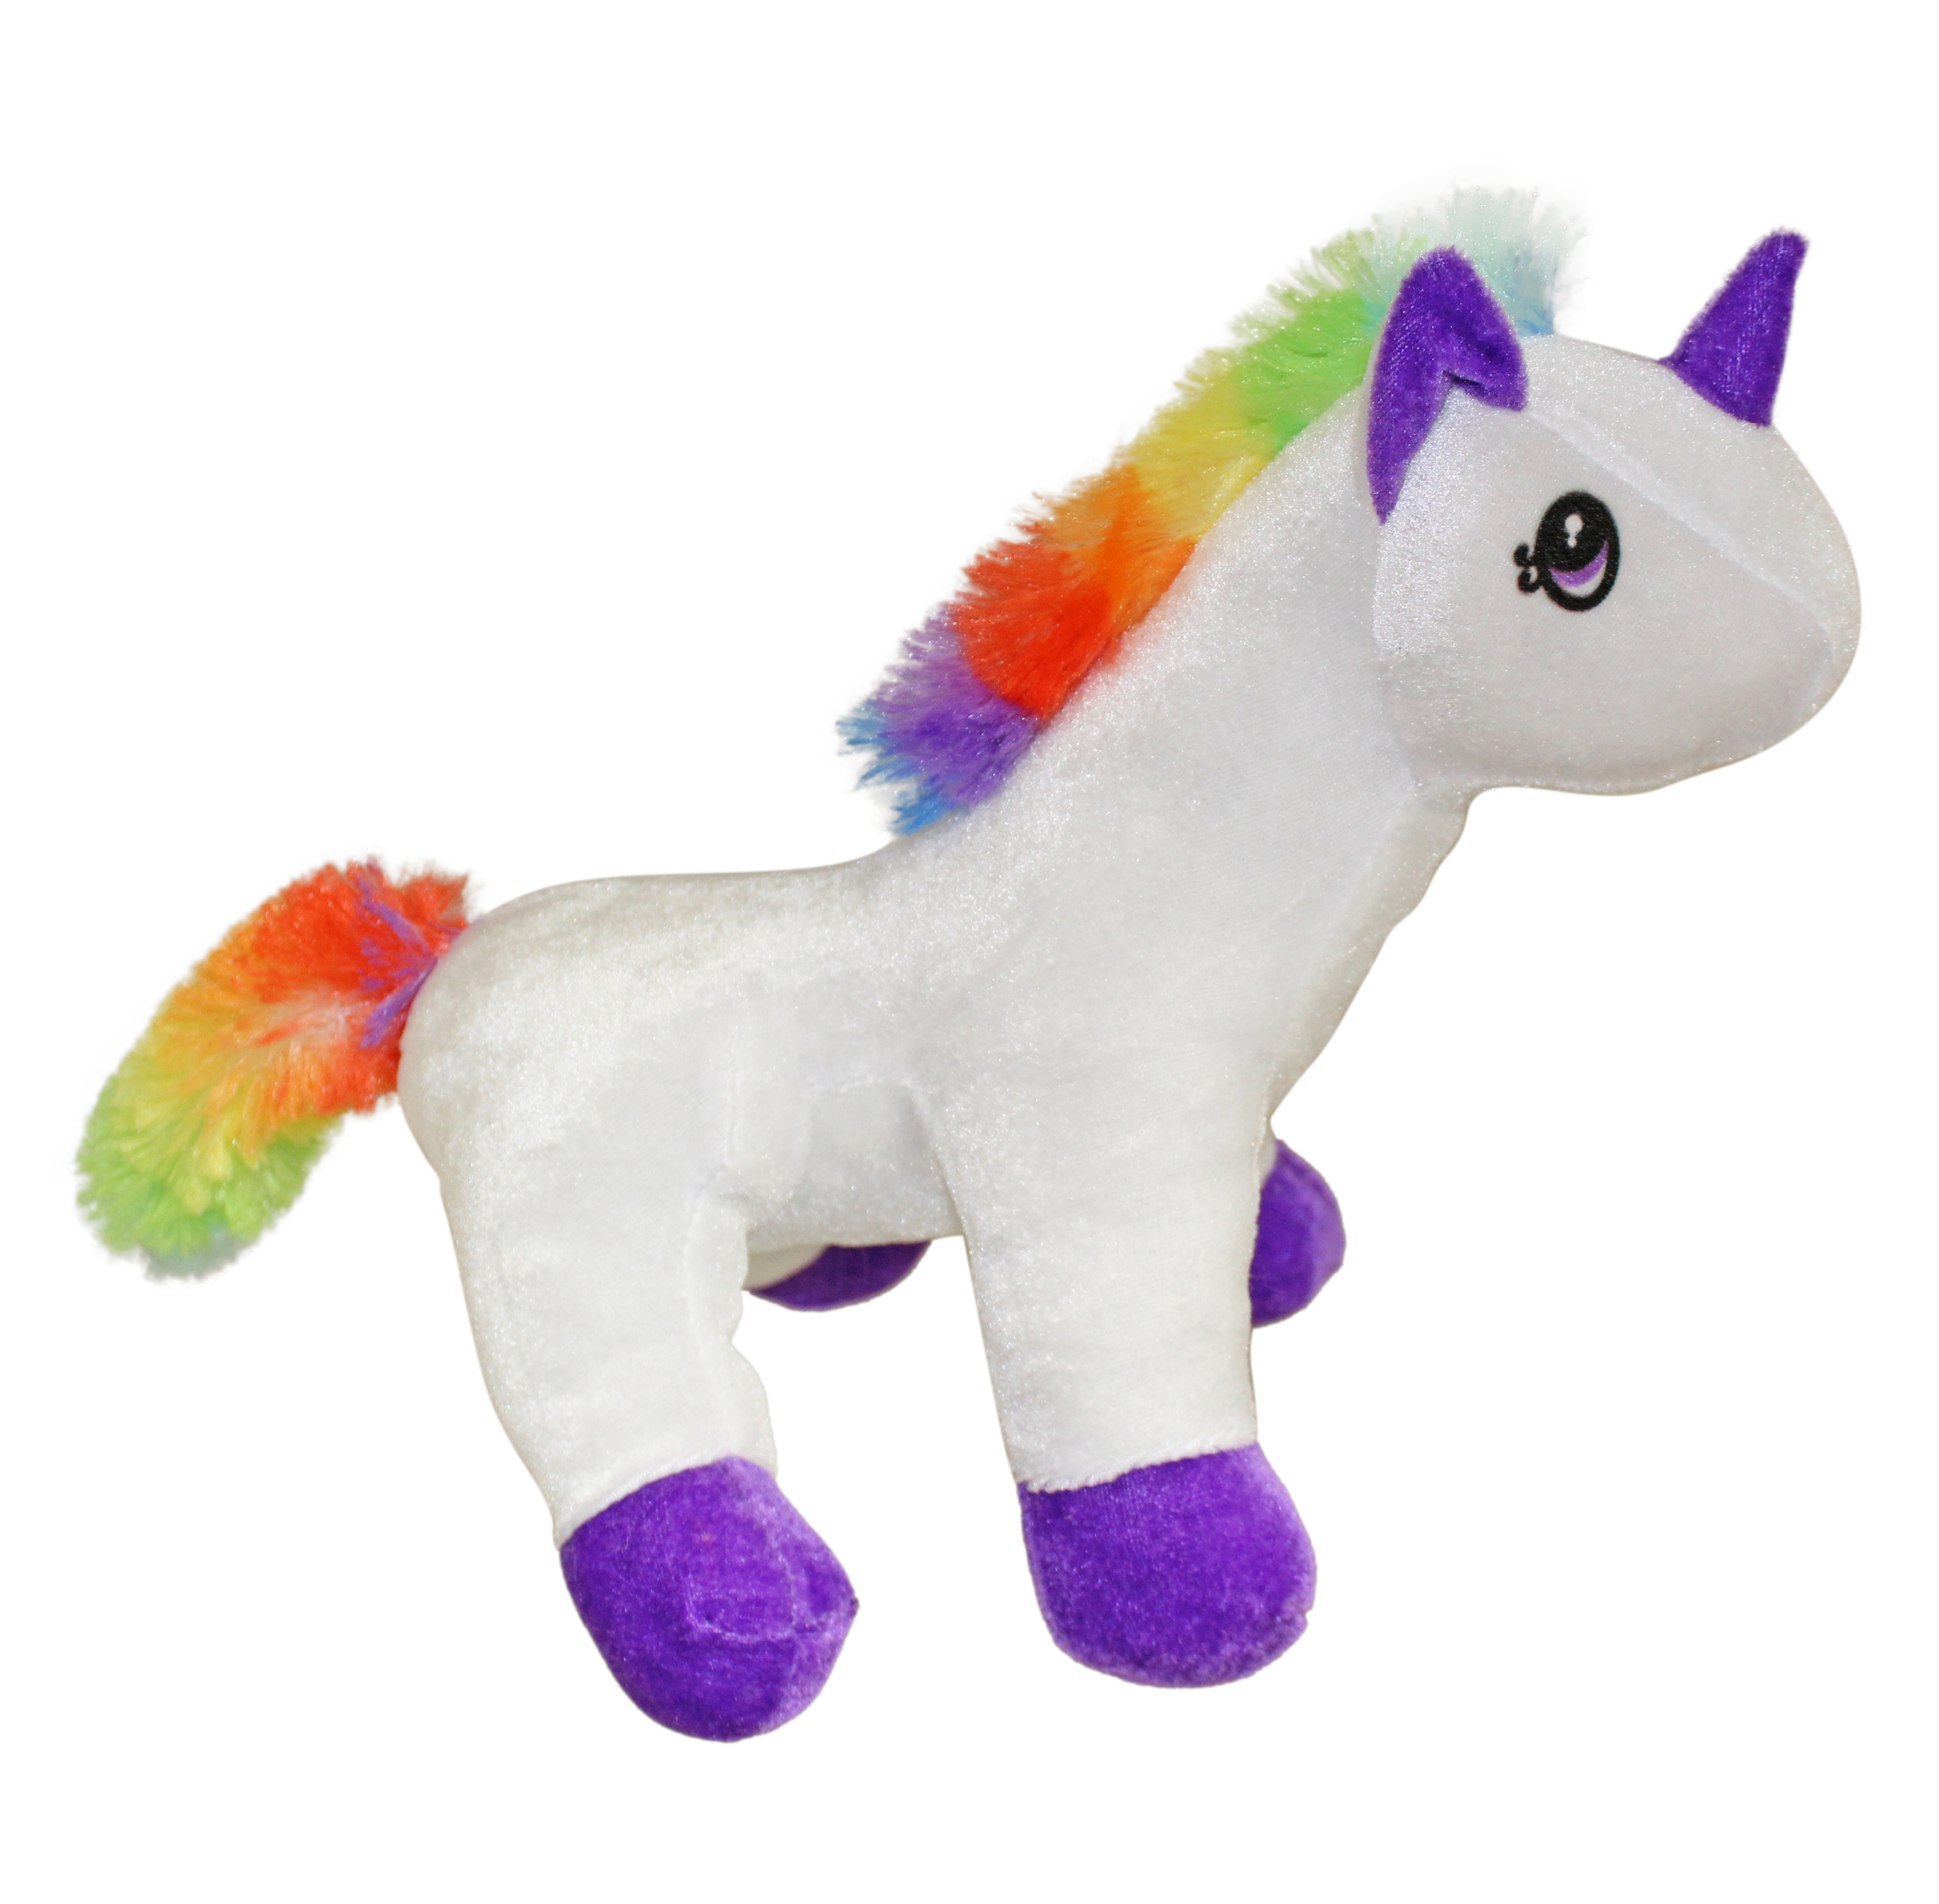 Plush Pal 12" Soft & Fluffy Purple Unicorn Stuffed Animal Toy with Rainbow Tail And Mane - image 1 of 5